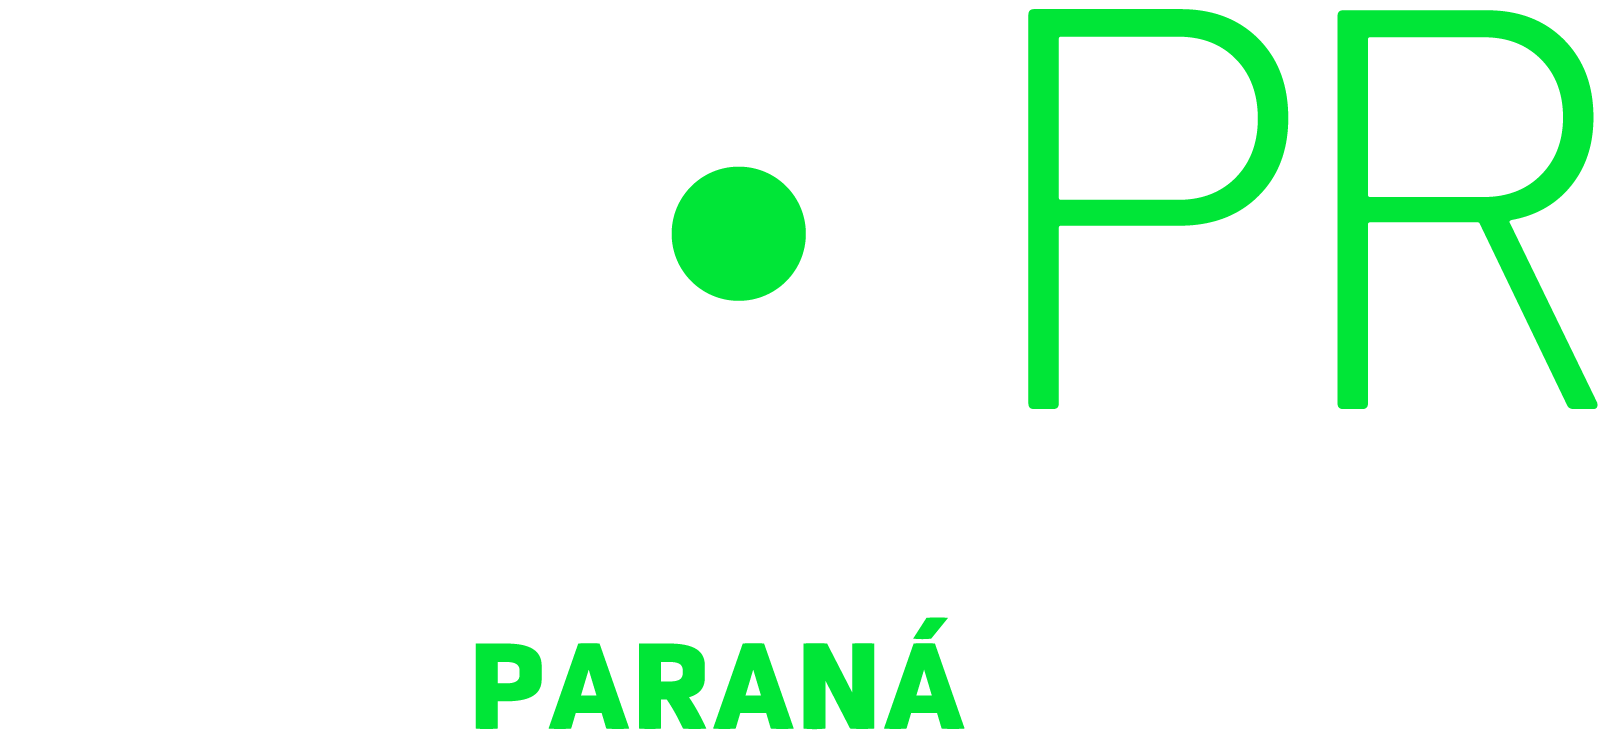 PoP-PR